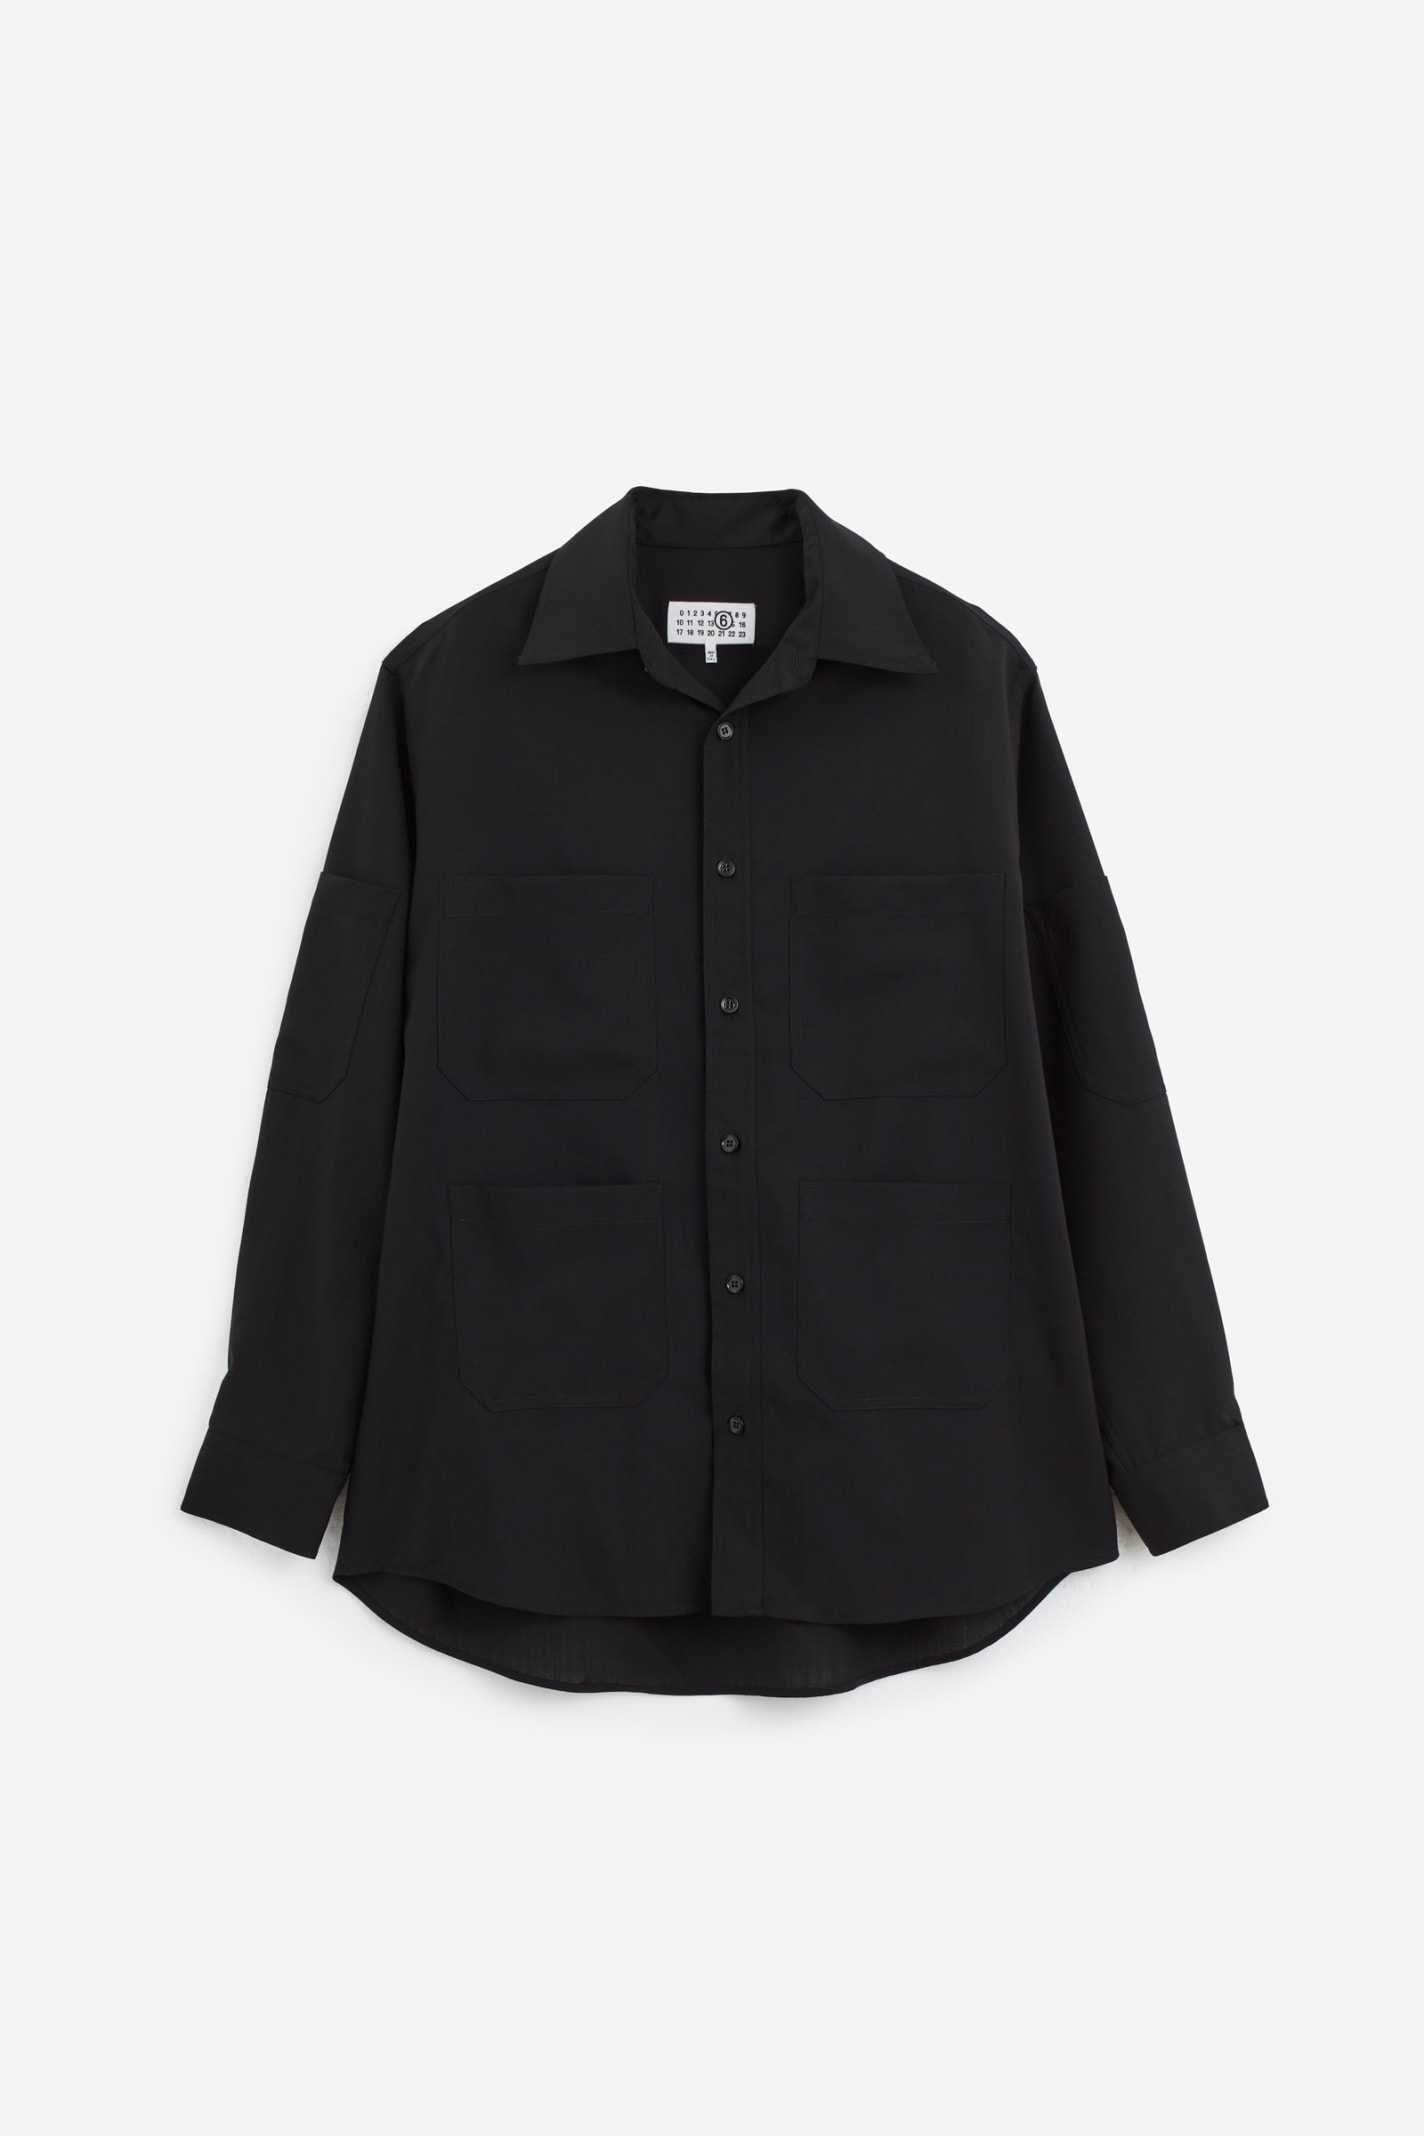 Mm6 Maison Margiela Shirt In Black